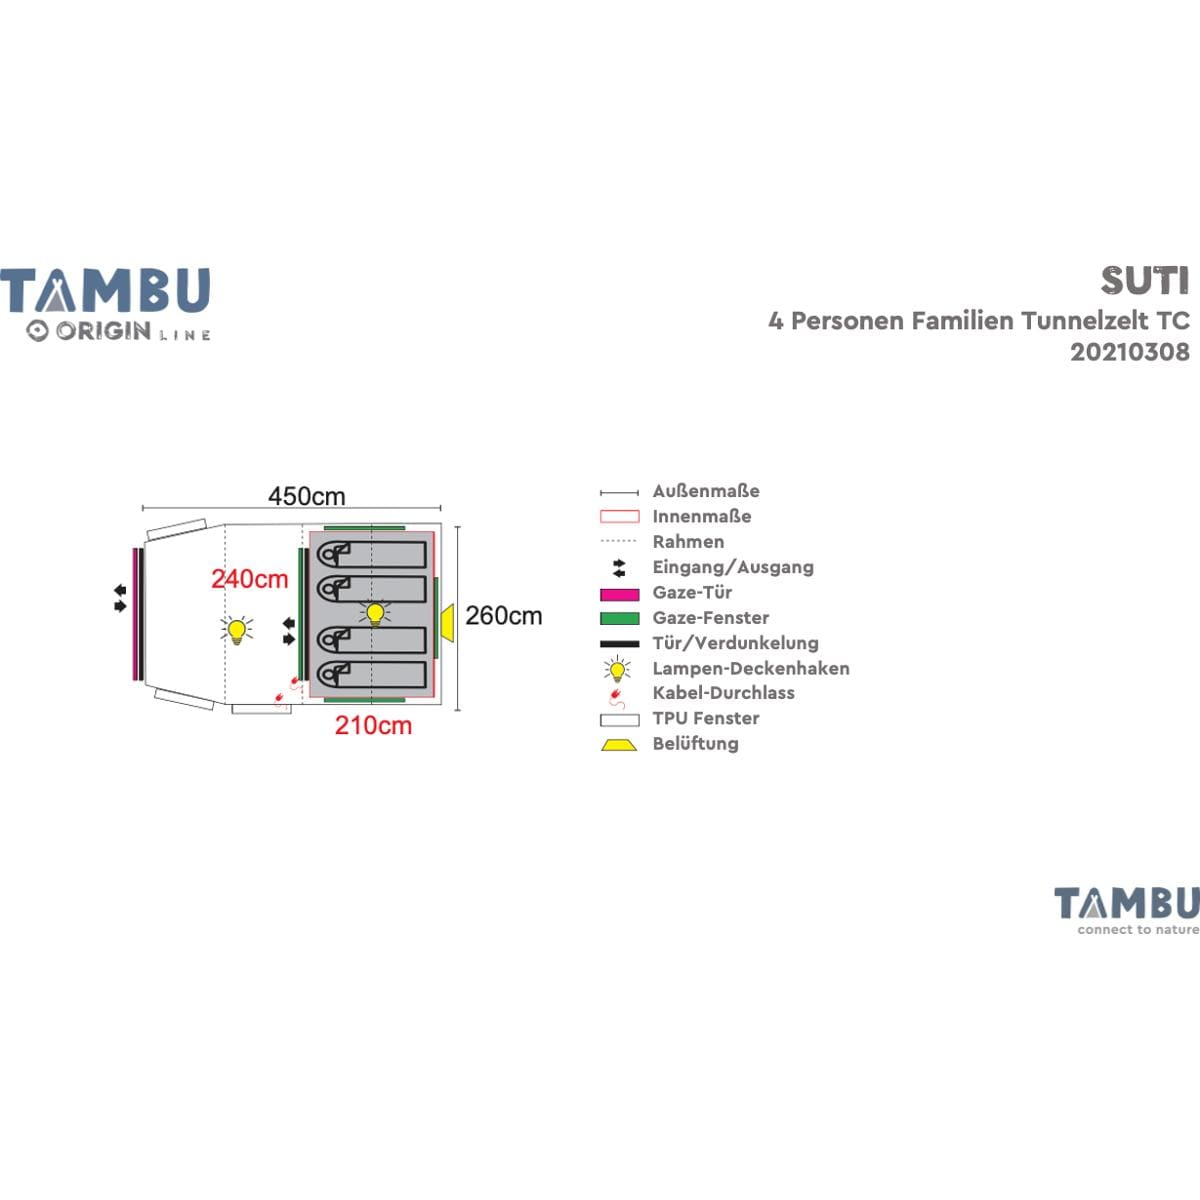 Tambu Suti Familien Tunnelzelt TC, 4 Personen, 450x260x195cm, grau/blau bei  Camping Wagner Campingzubehör